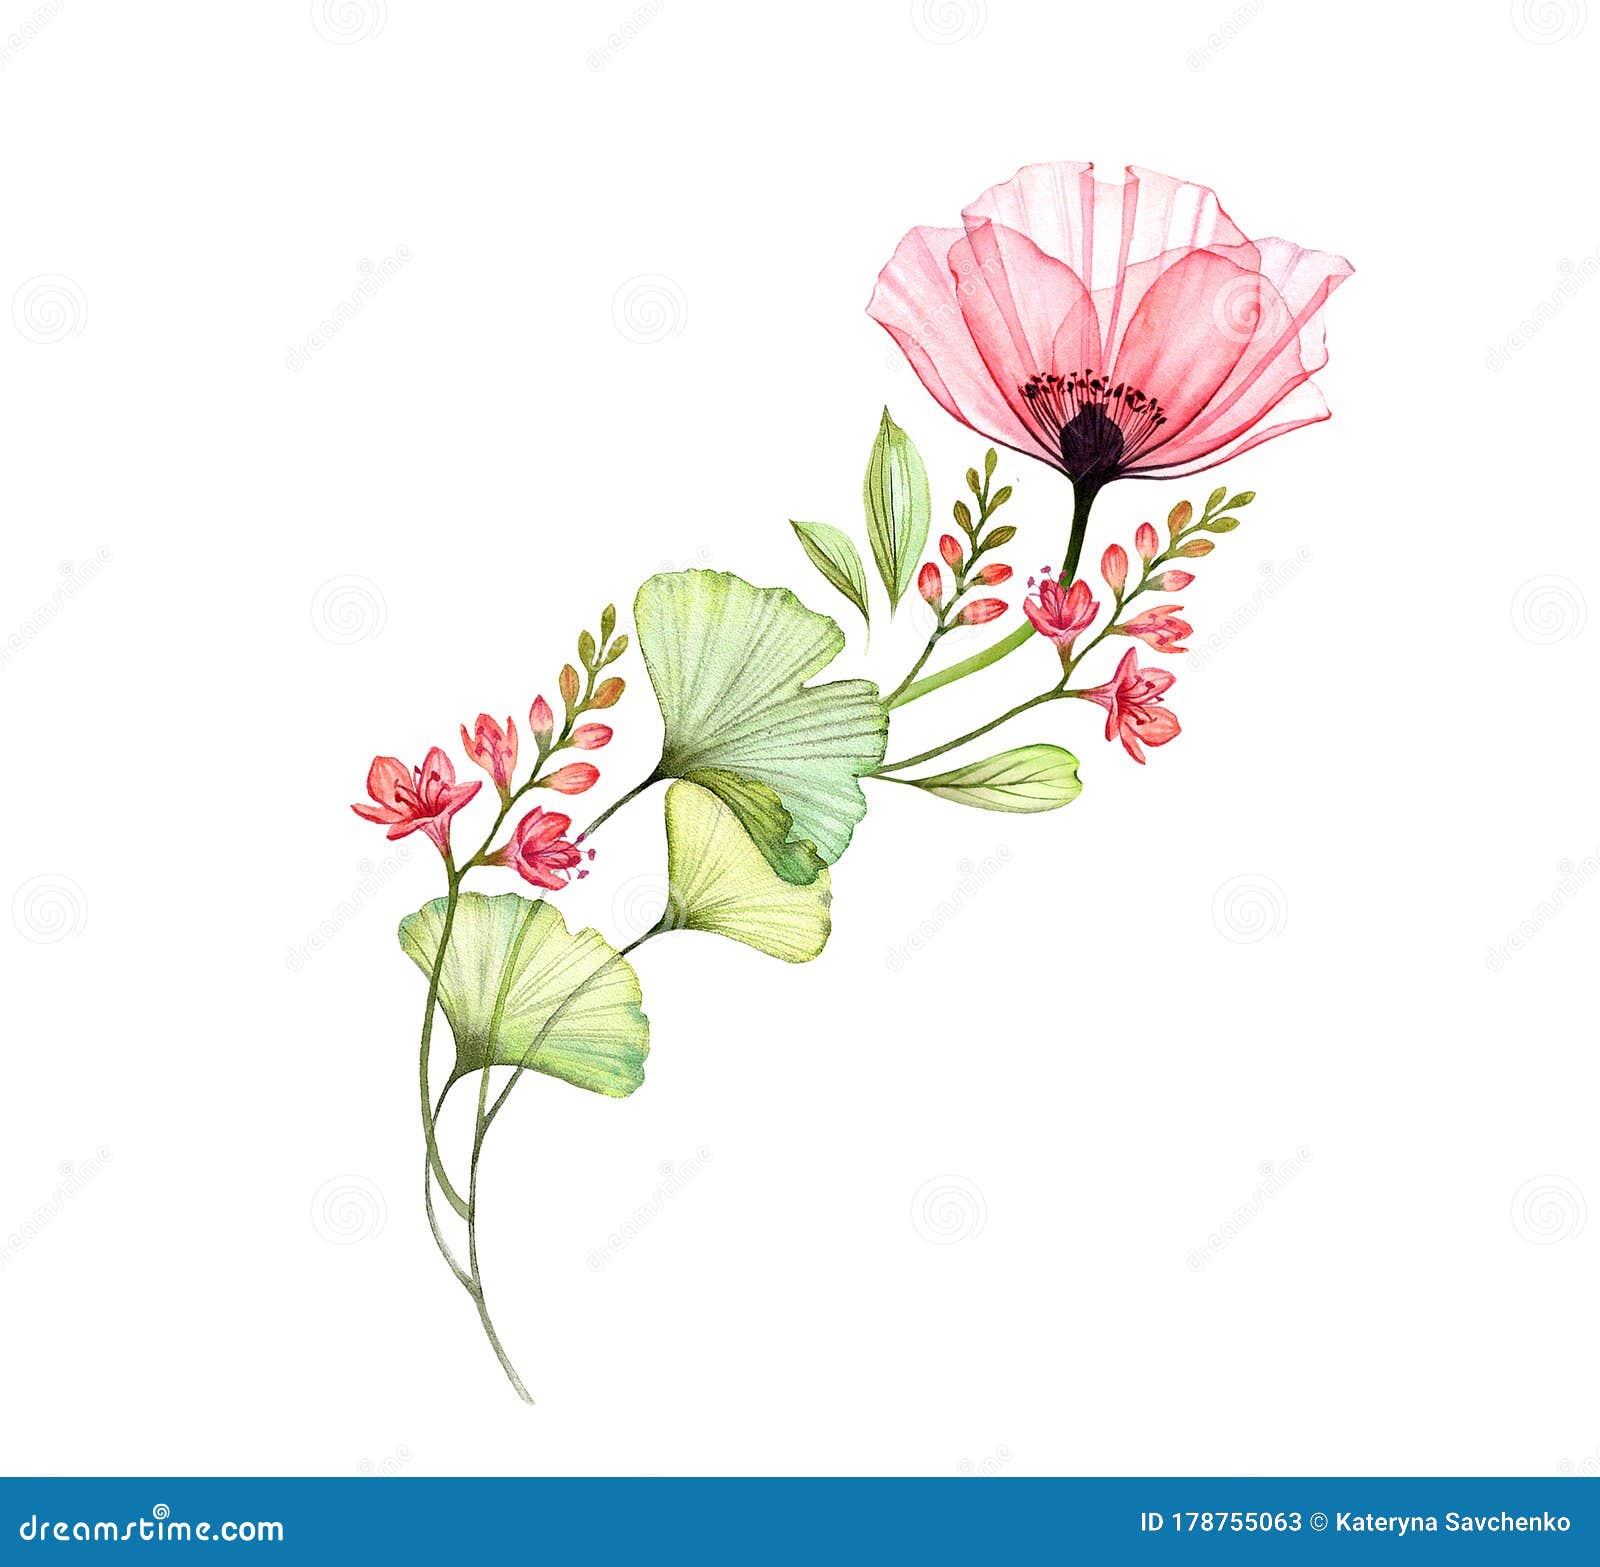 Watercolor floral arrangement. Vertical design element. Abstract